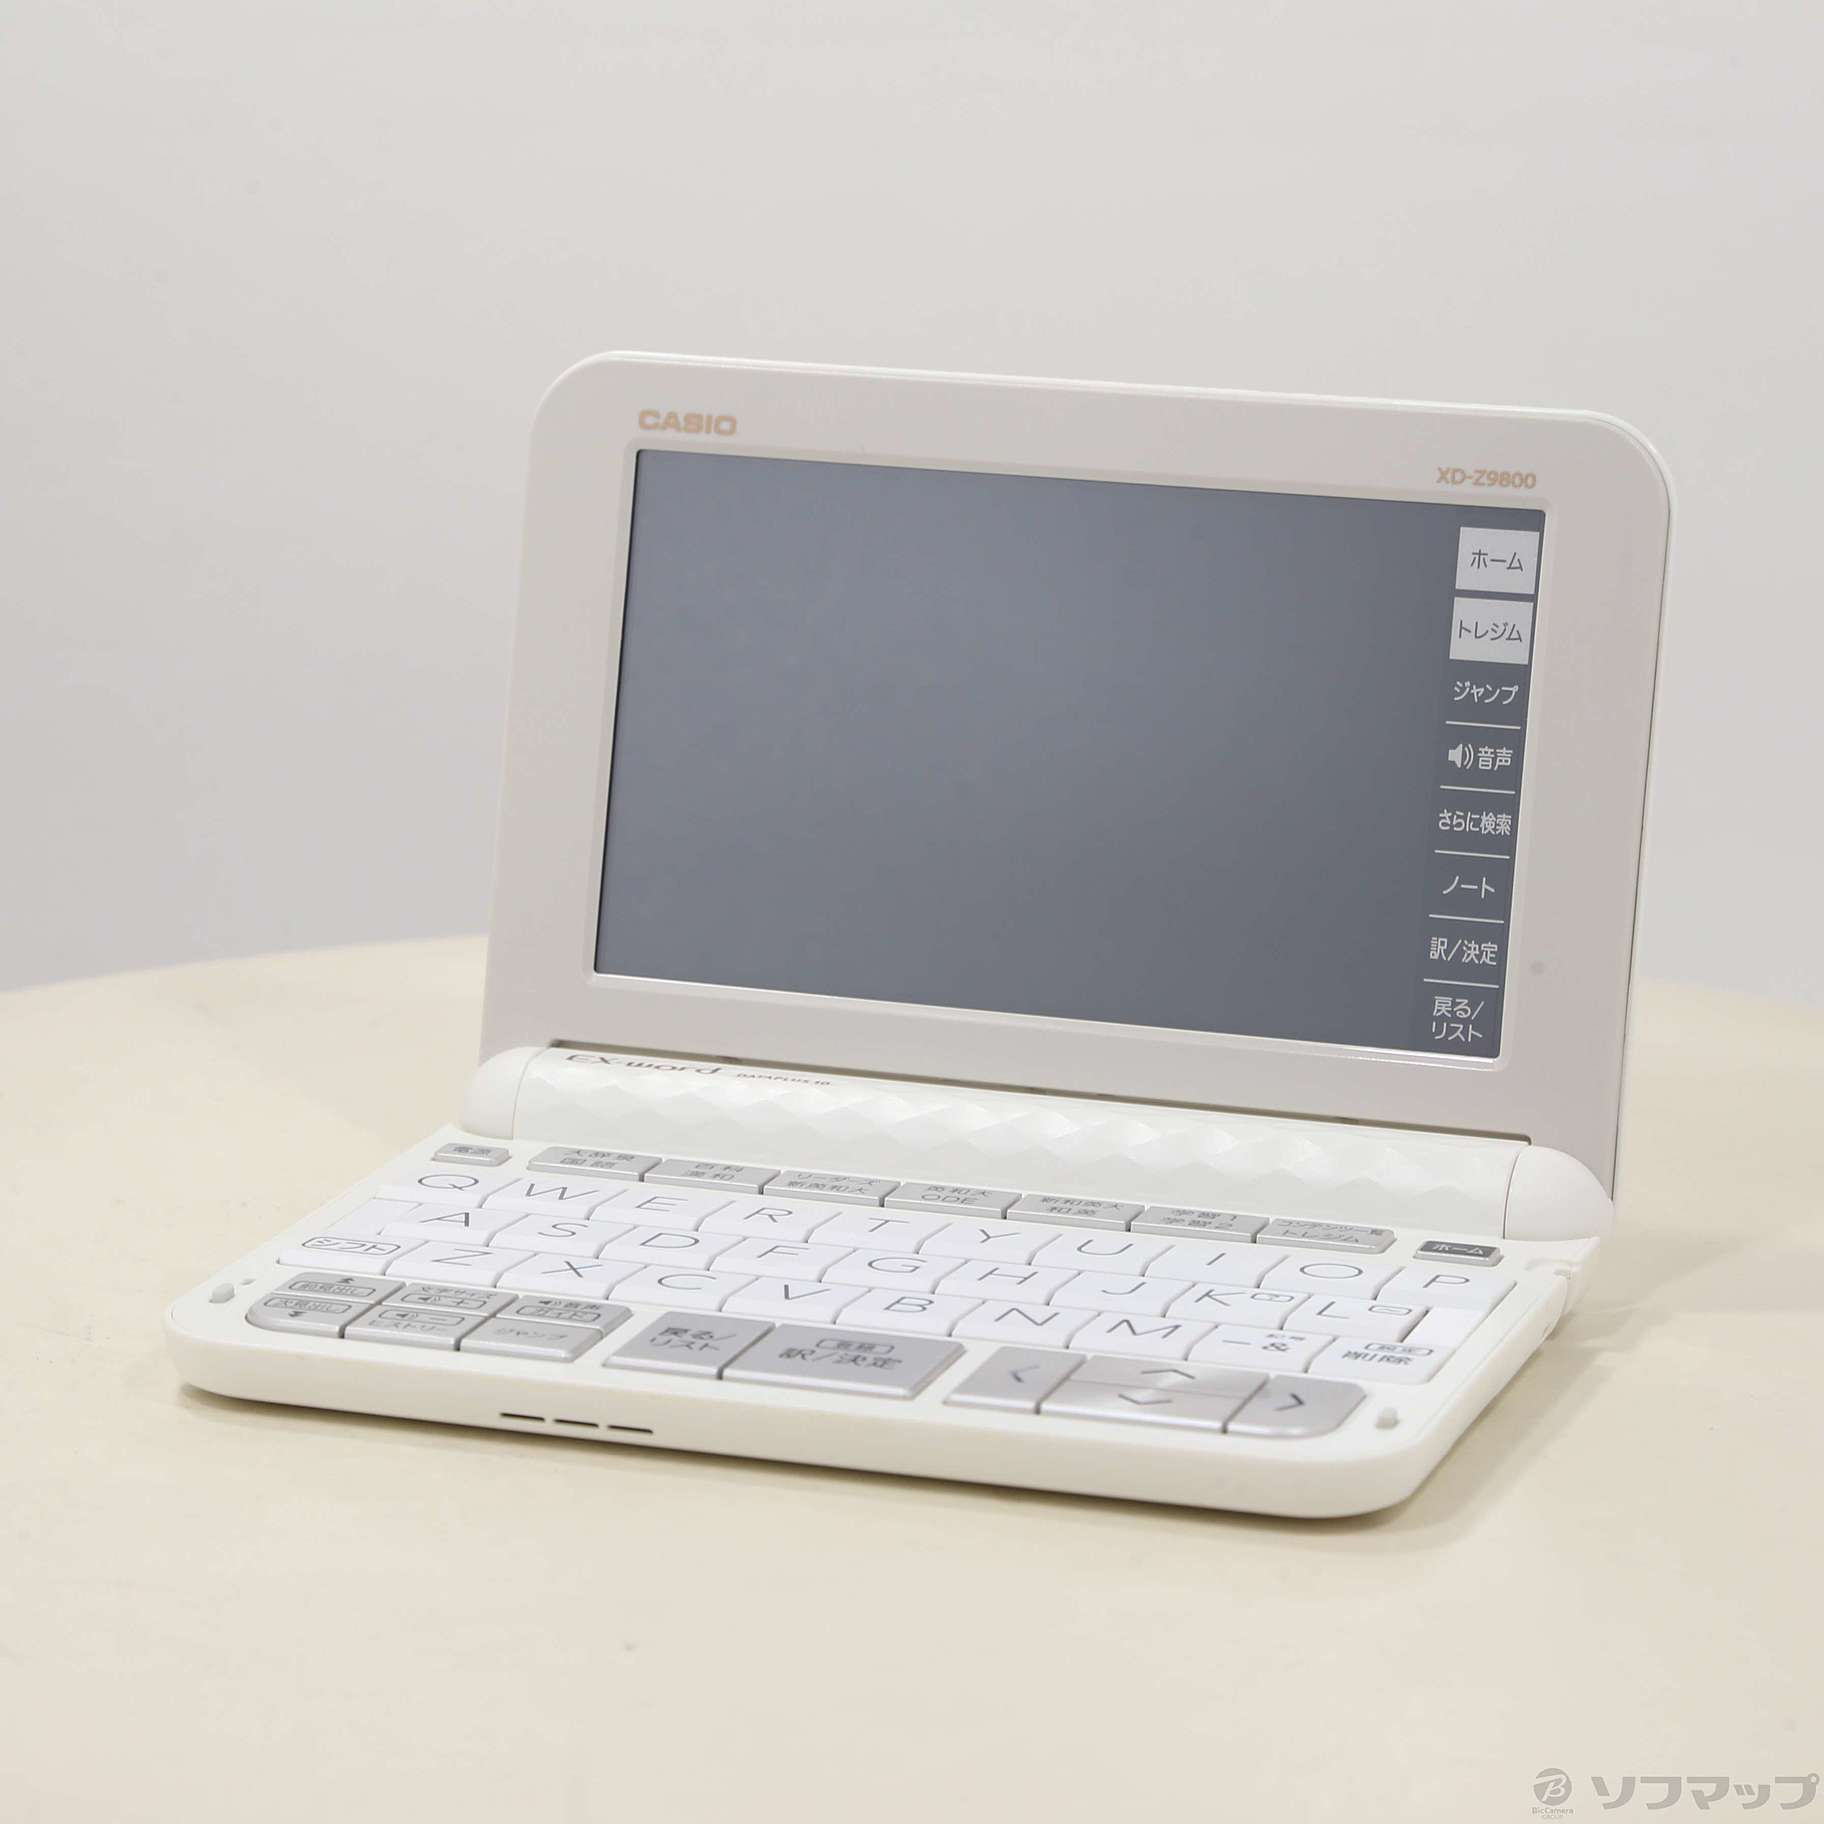 カシオXD-Z9800WE